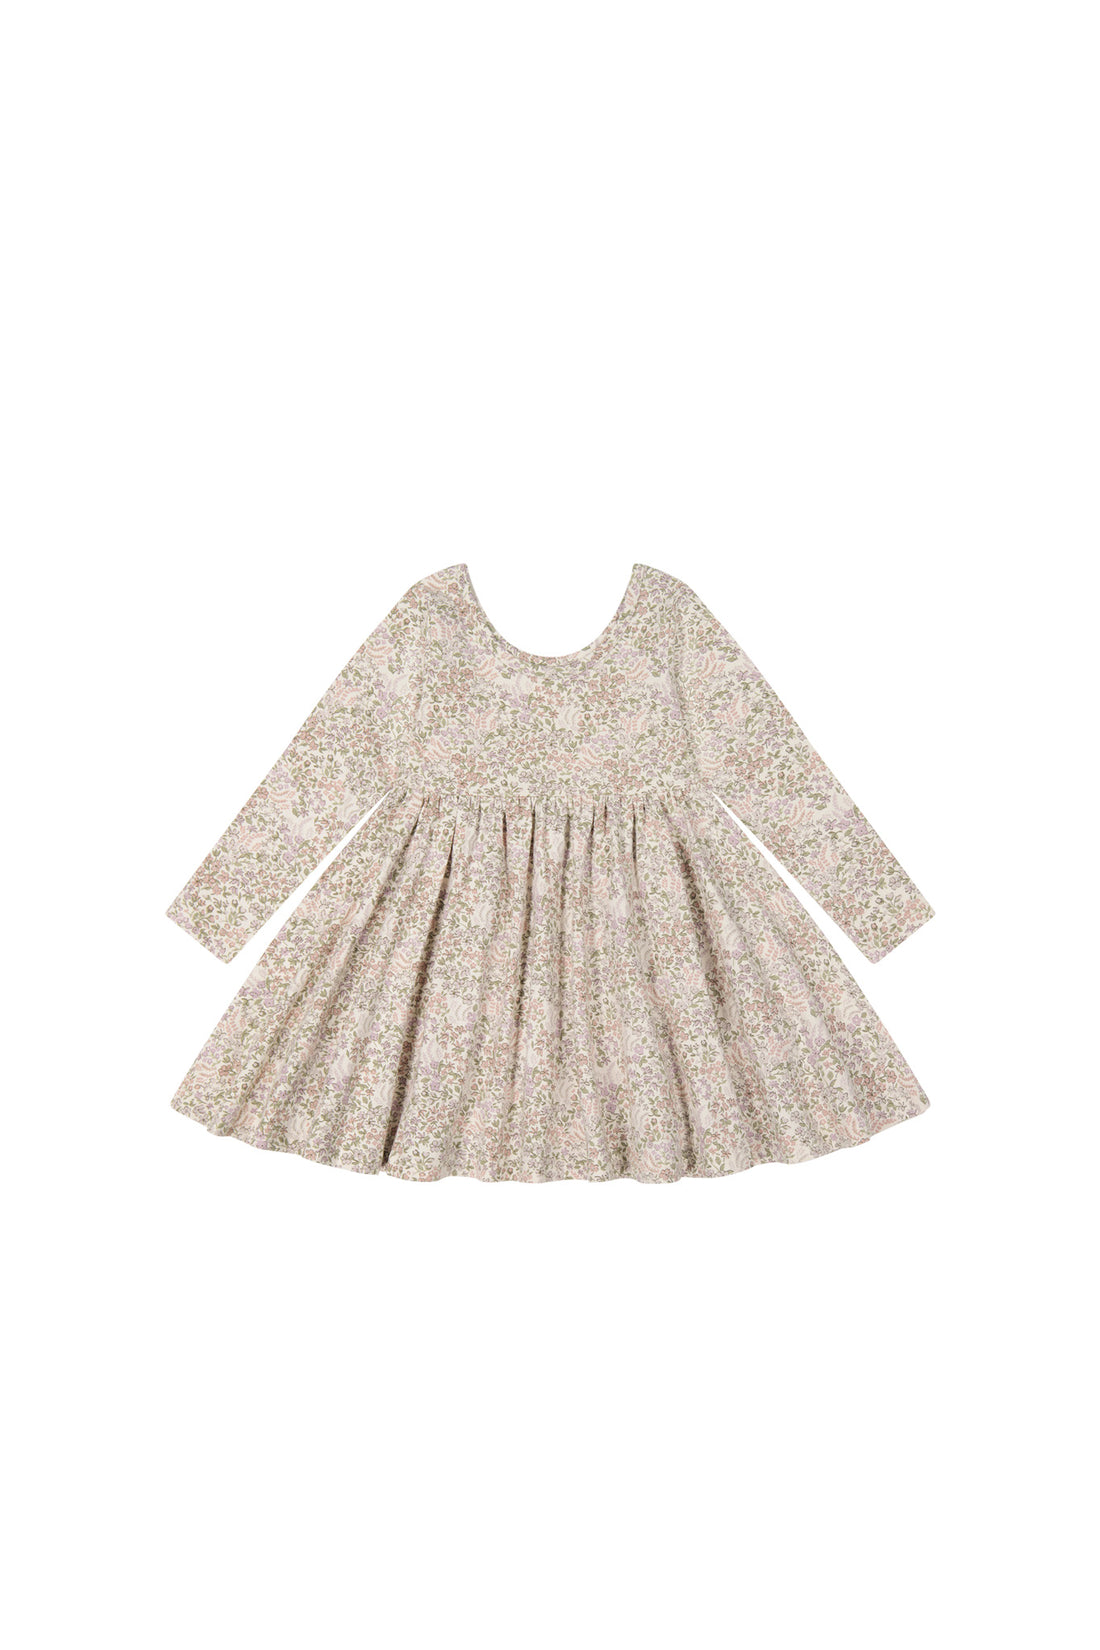 Organic Cotton Tallulah Dress - April Eggnog Childrens Dress from Jamie Kay NZ